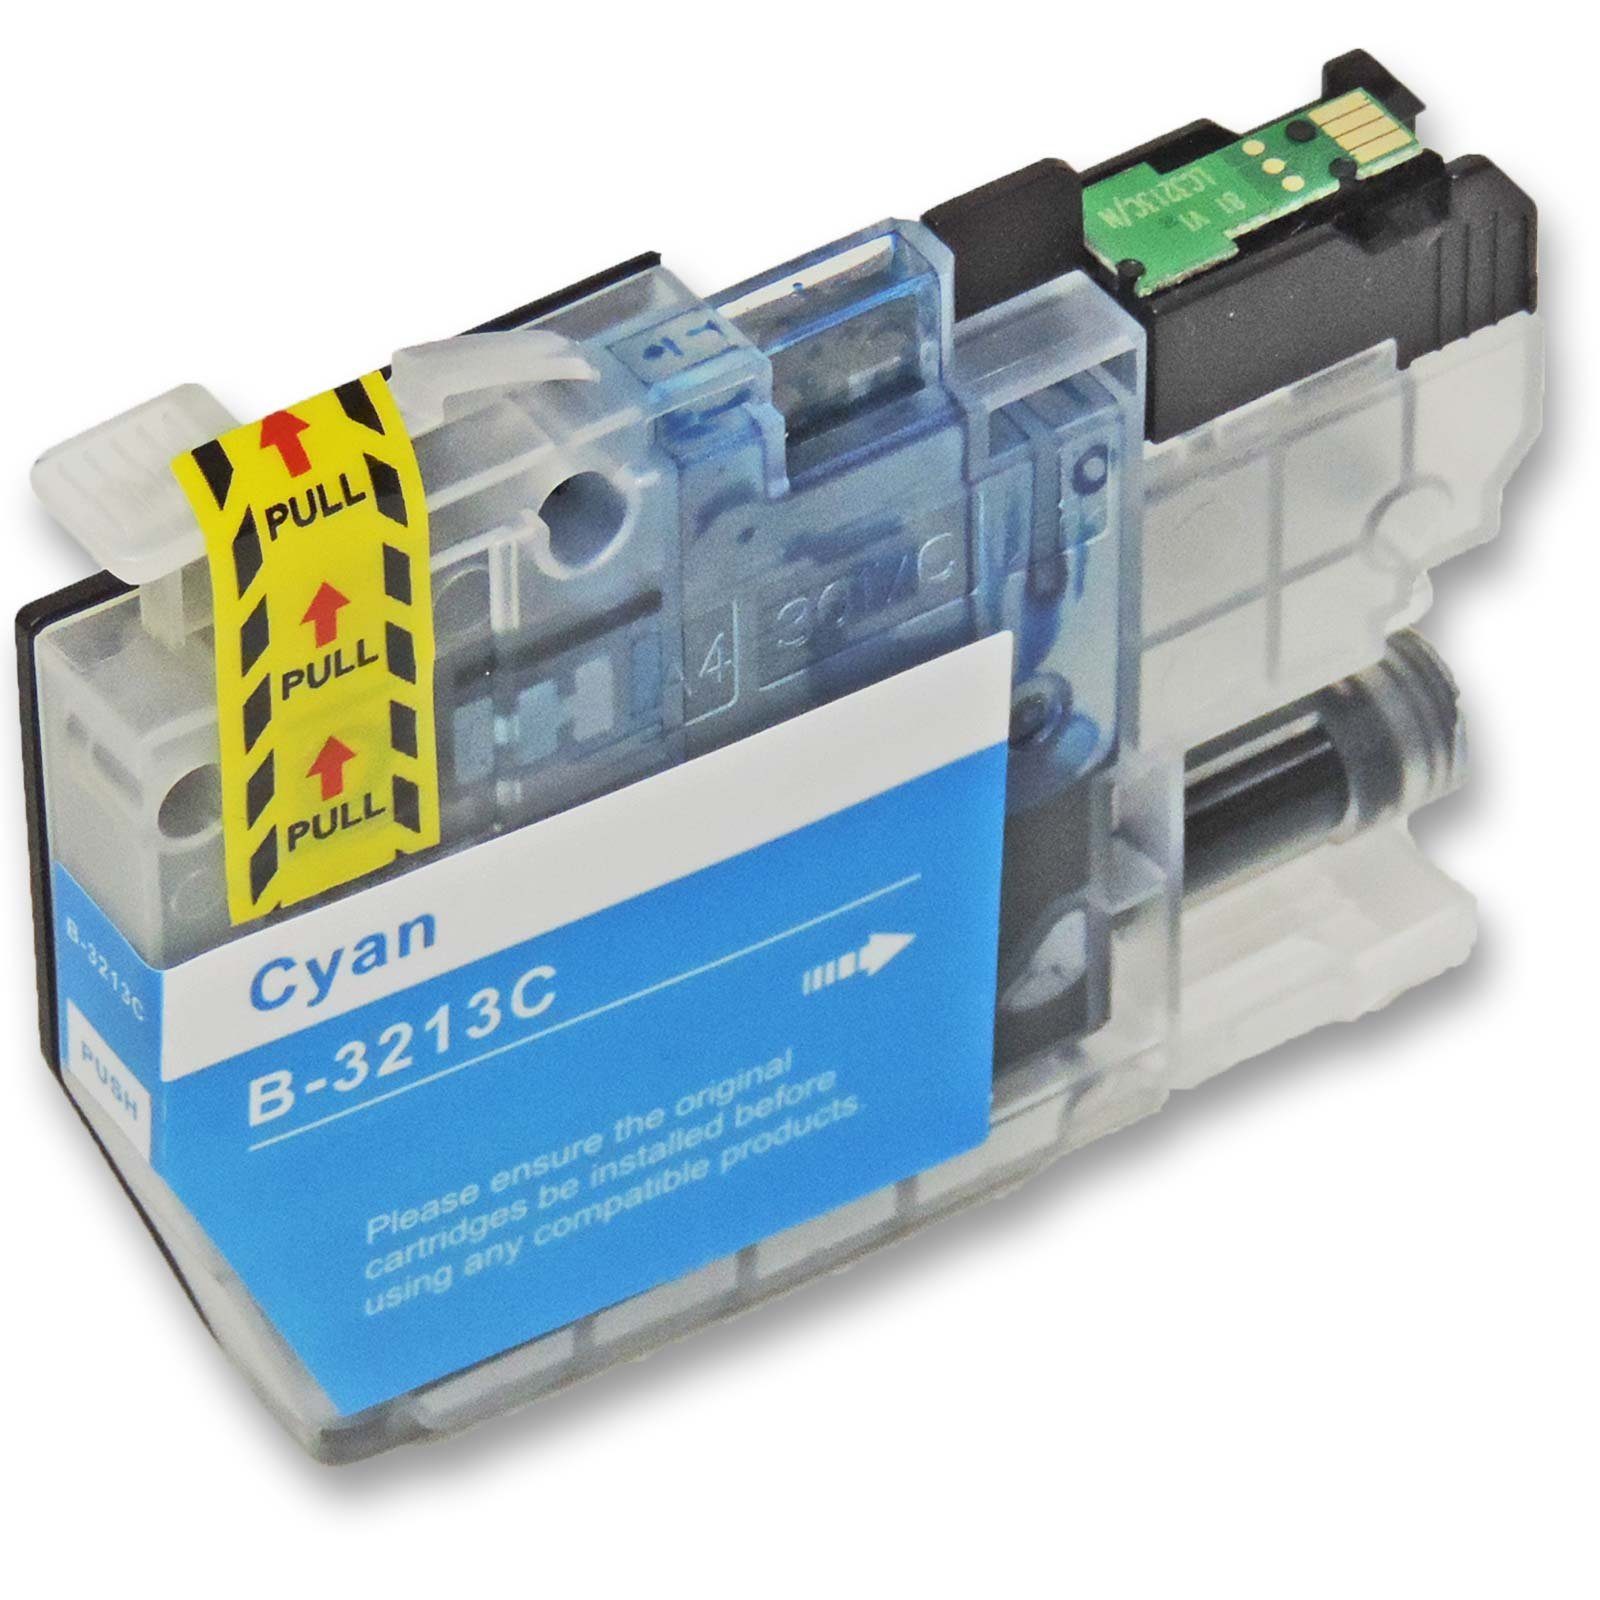 D&C Kompatibel Multipack (Schwarz, XL Brother LC-3213 4-Farben Tintenpatrone Cyan, Magen